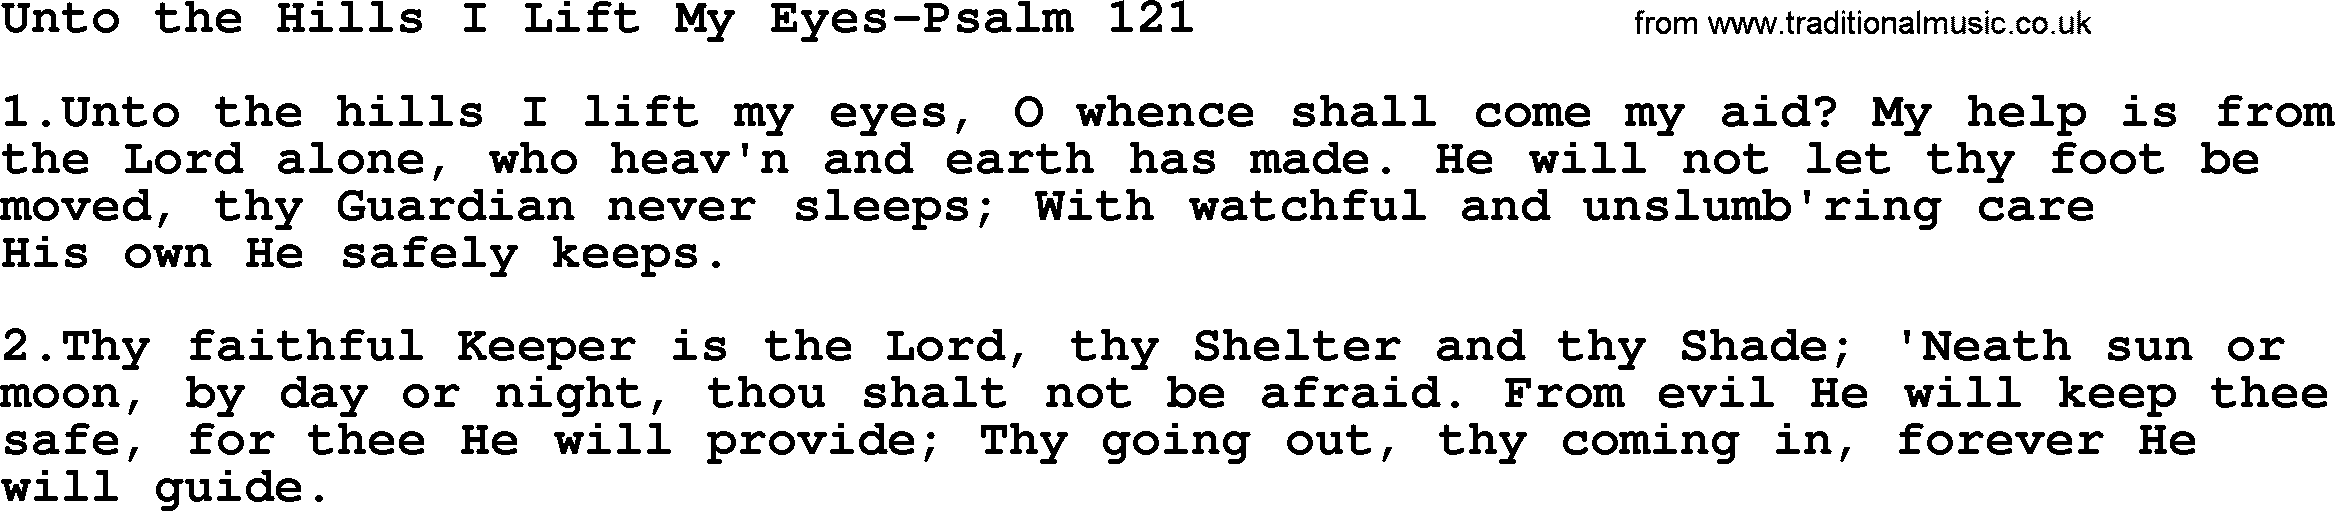 Hymns from the Psalms, Hymn: Unto The Hills I Lift My Eyes-Psalm 121, lyrics with PDF